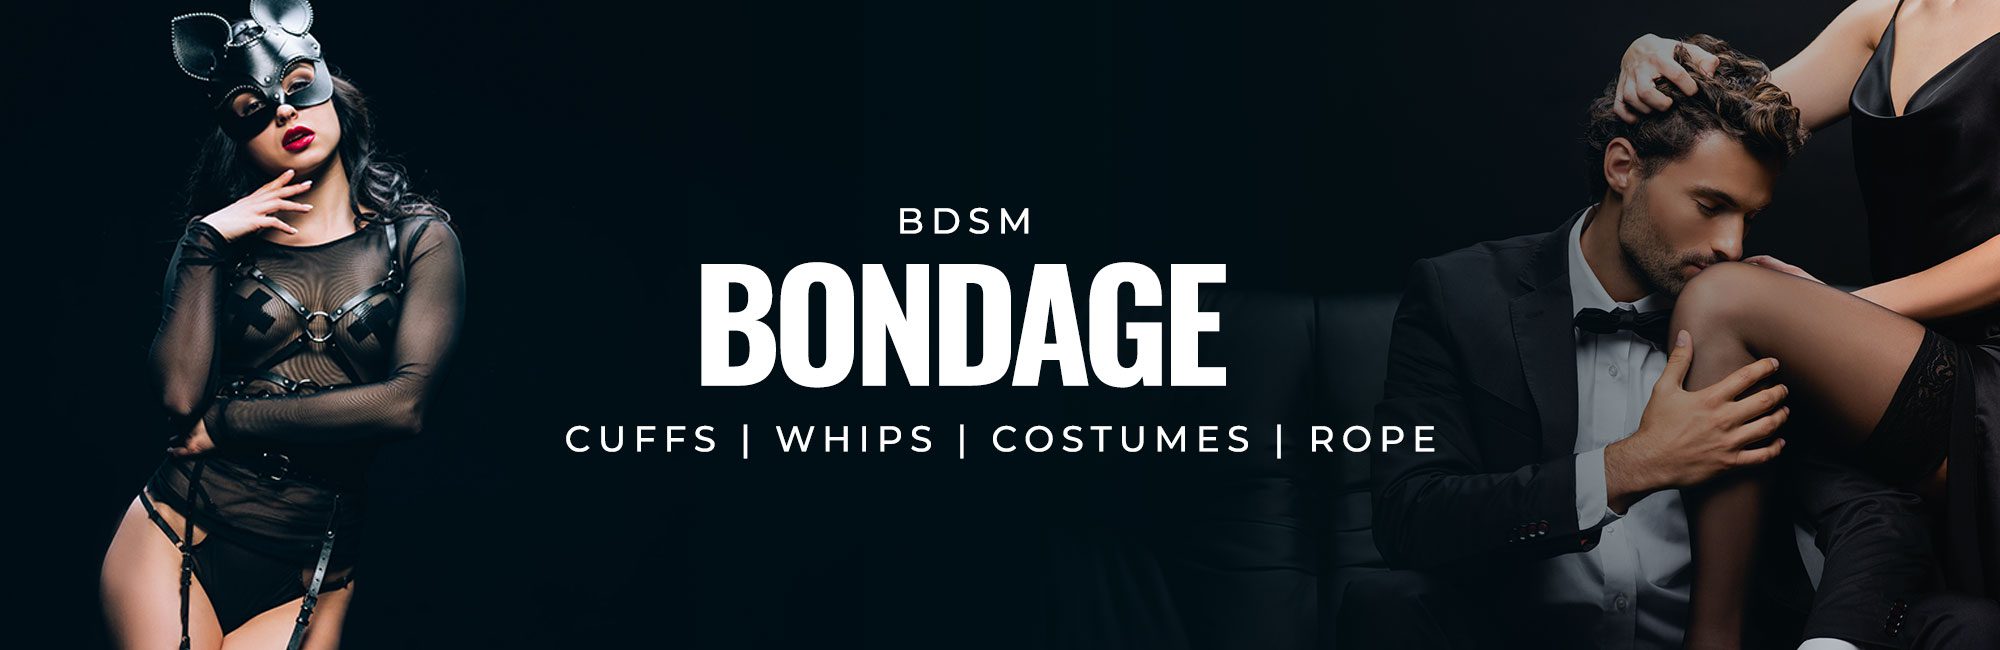 BDSM and Bondage Sex Toys at Pleasure Cartel Online Sex Toy Store